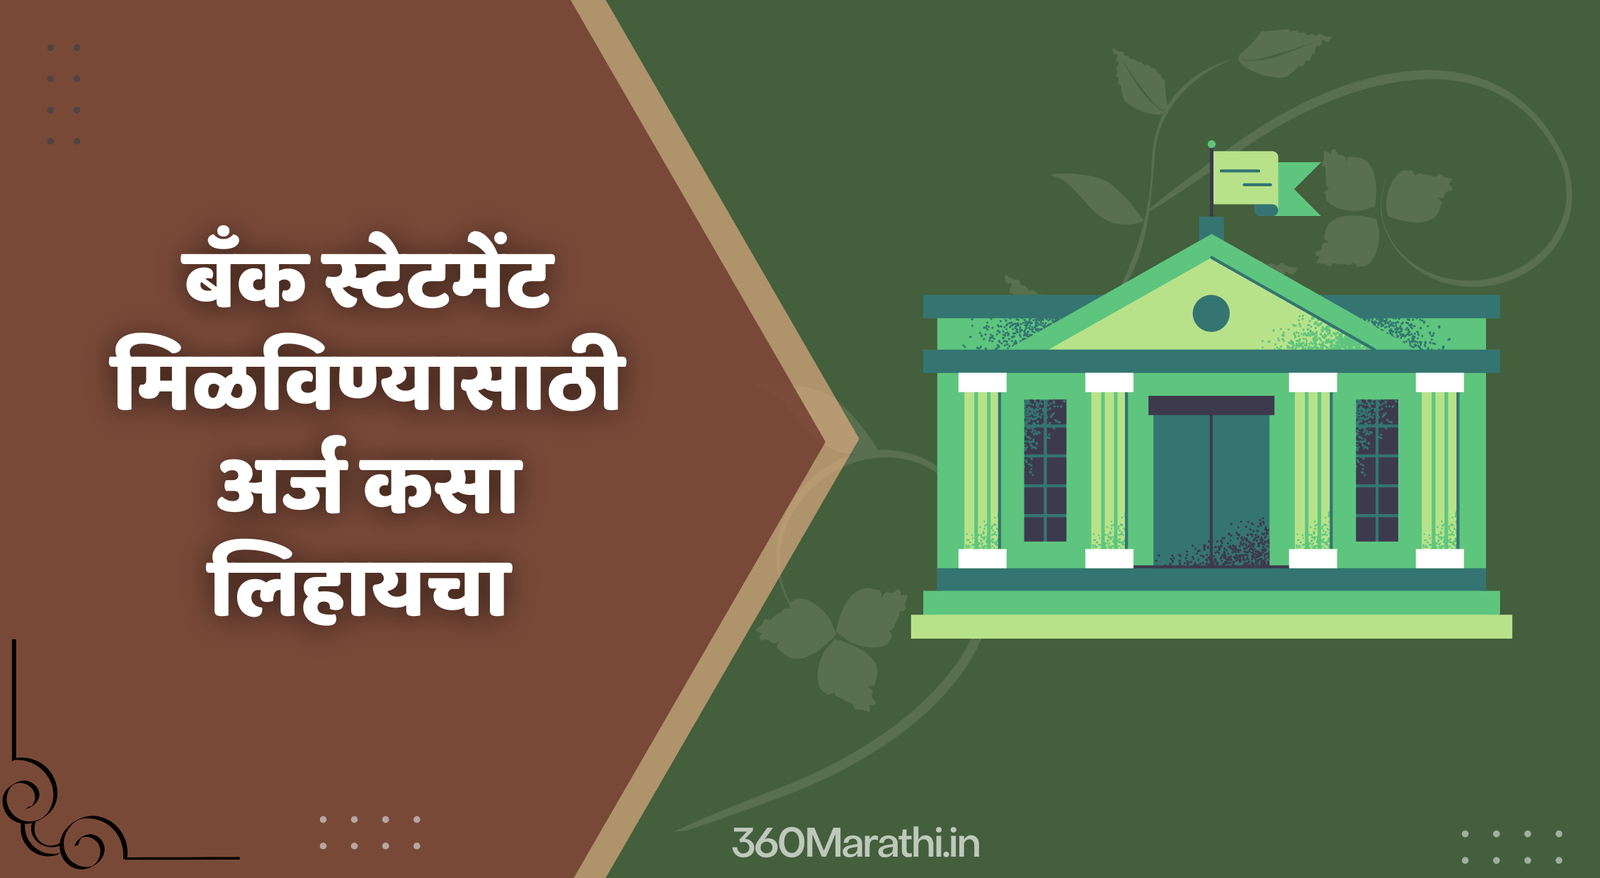 Bank Account Statement Application in Marathi